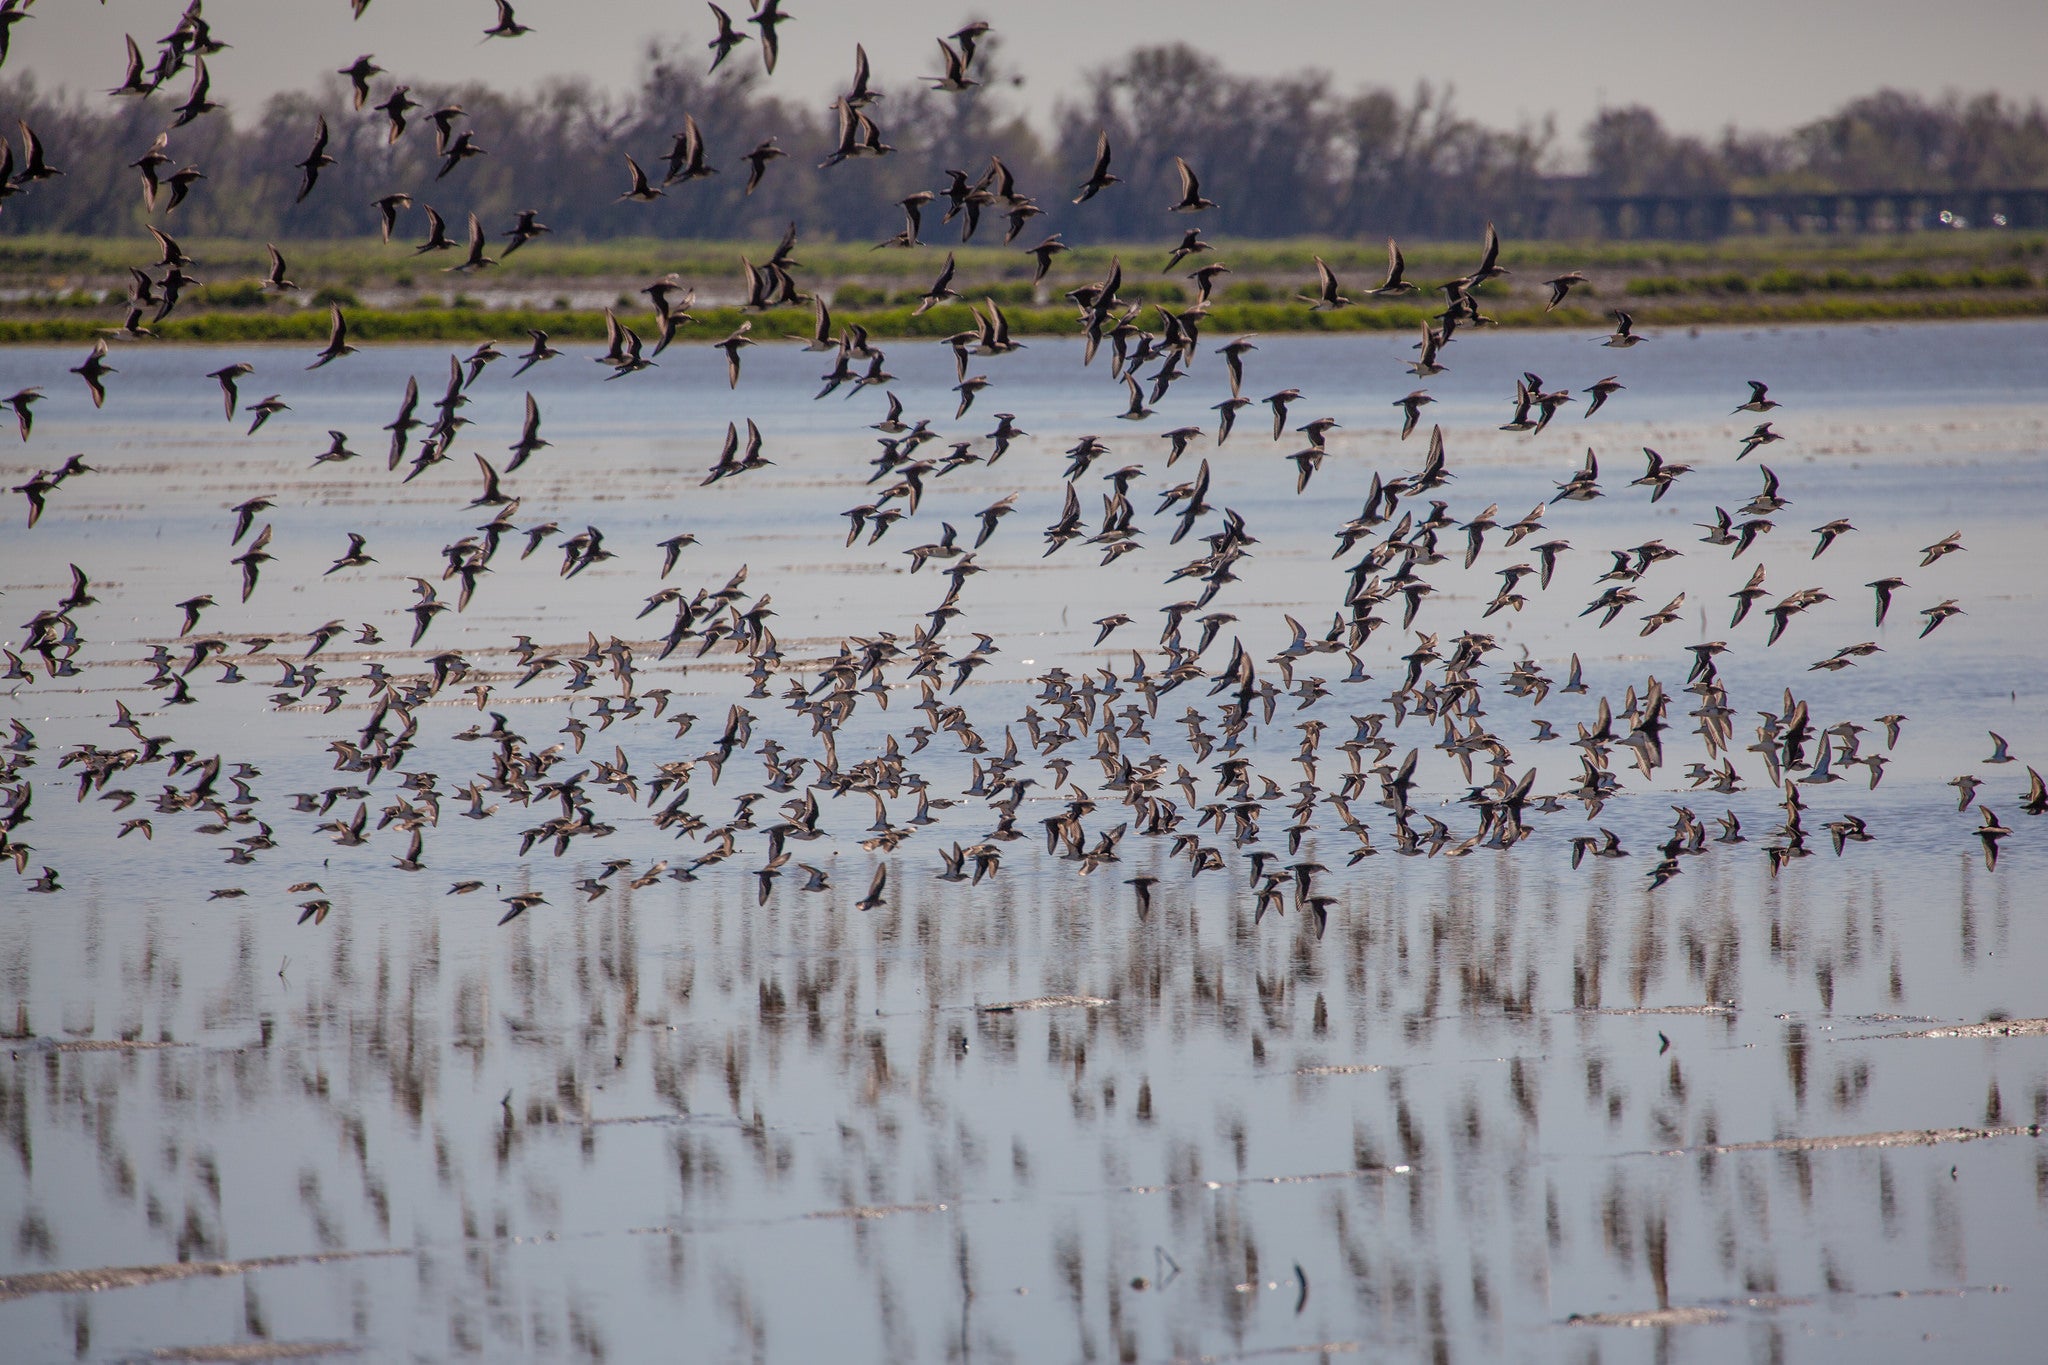 Birds take flight. Photo credit: Mathew Grimm